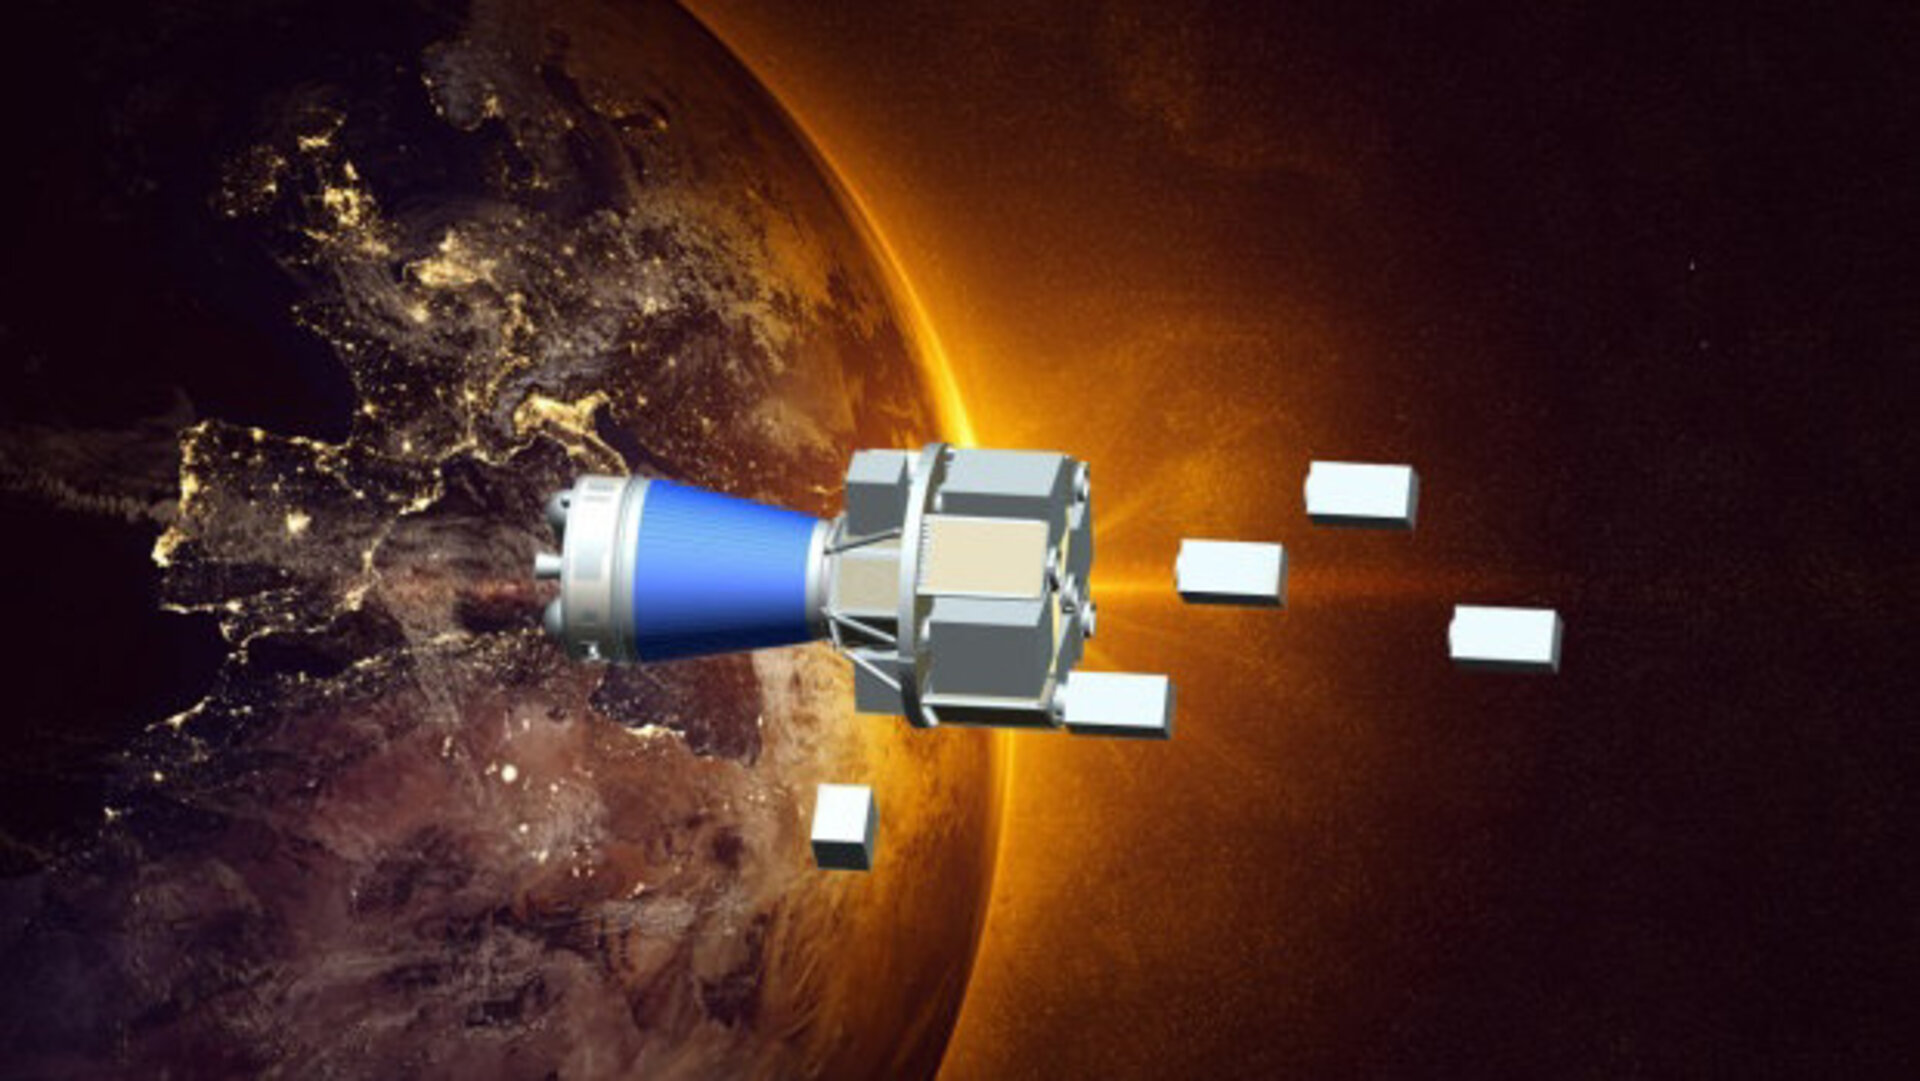 Deploying multiple small satellites